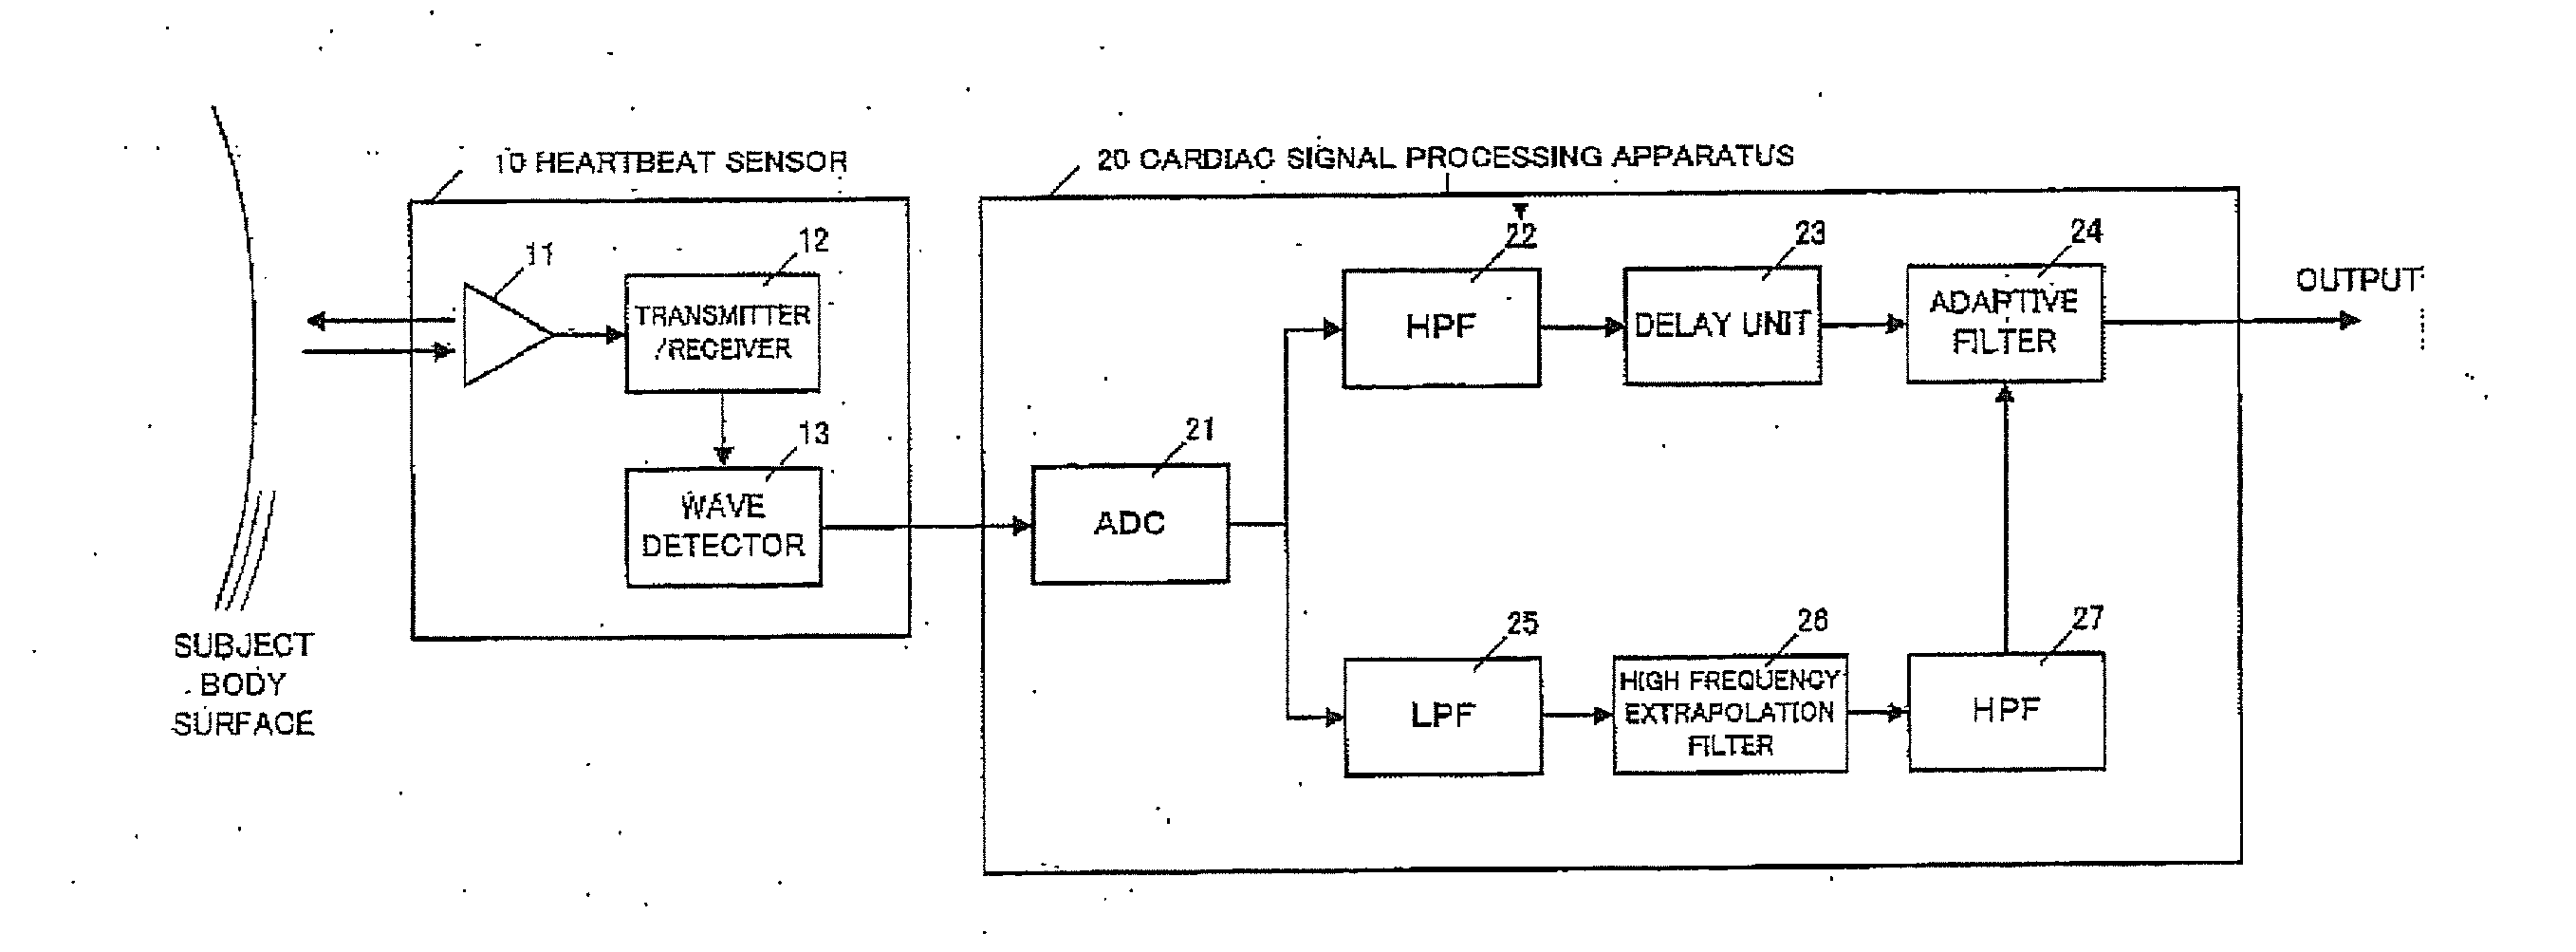 Cardiac signal processing apparatus and cardiac signal processing method